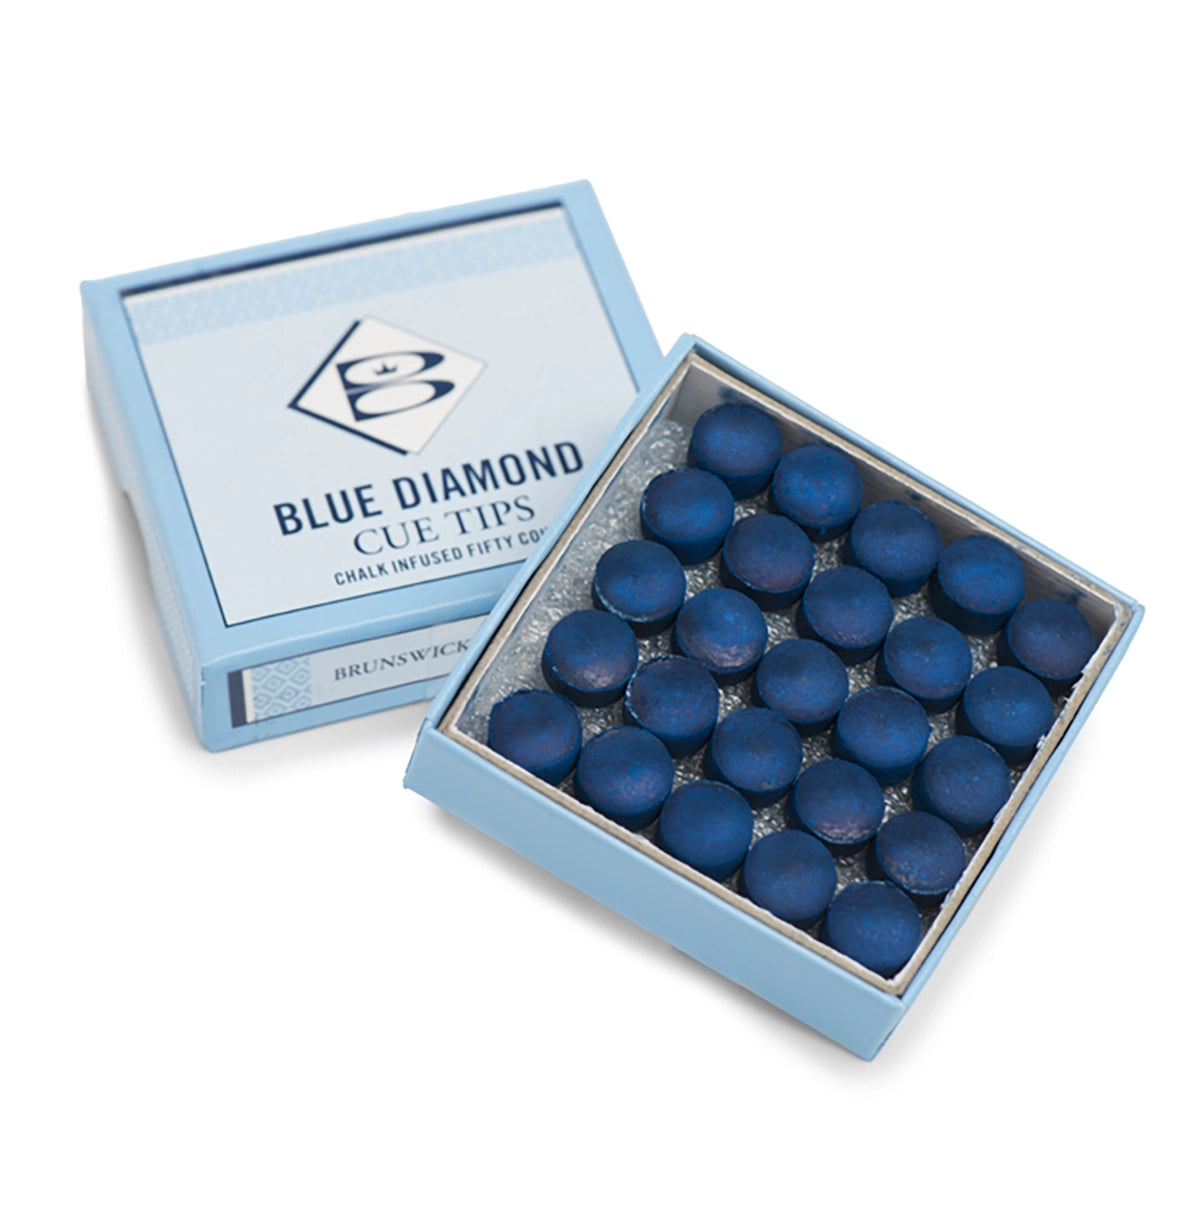 Brunswick Blue Diamond Leather Tips. Open box view